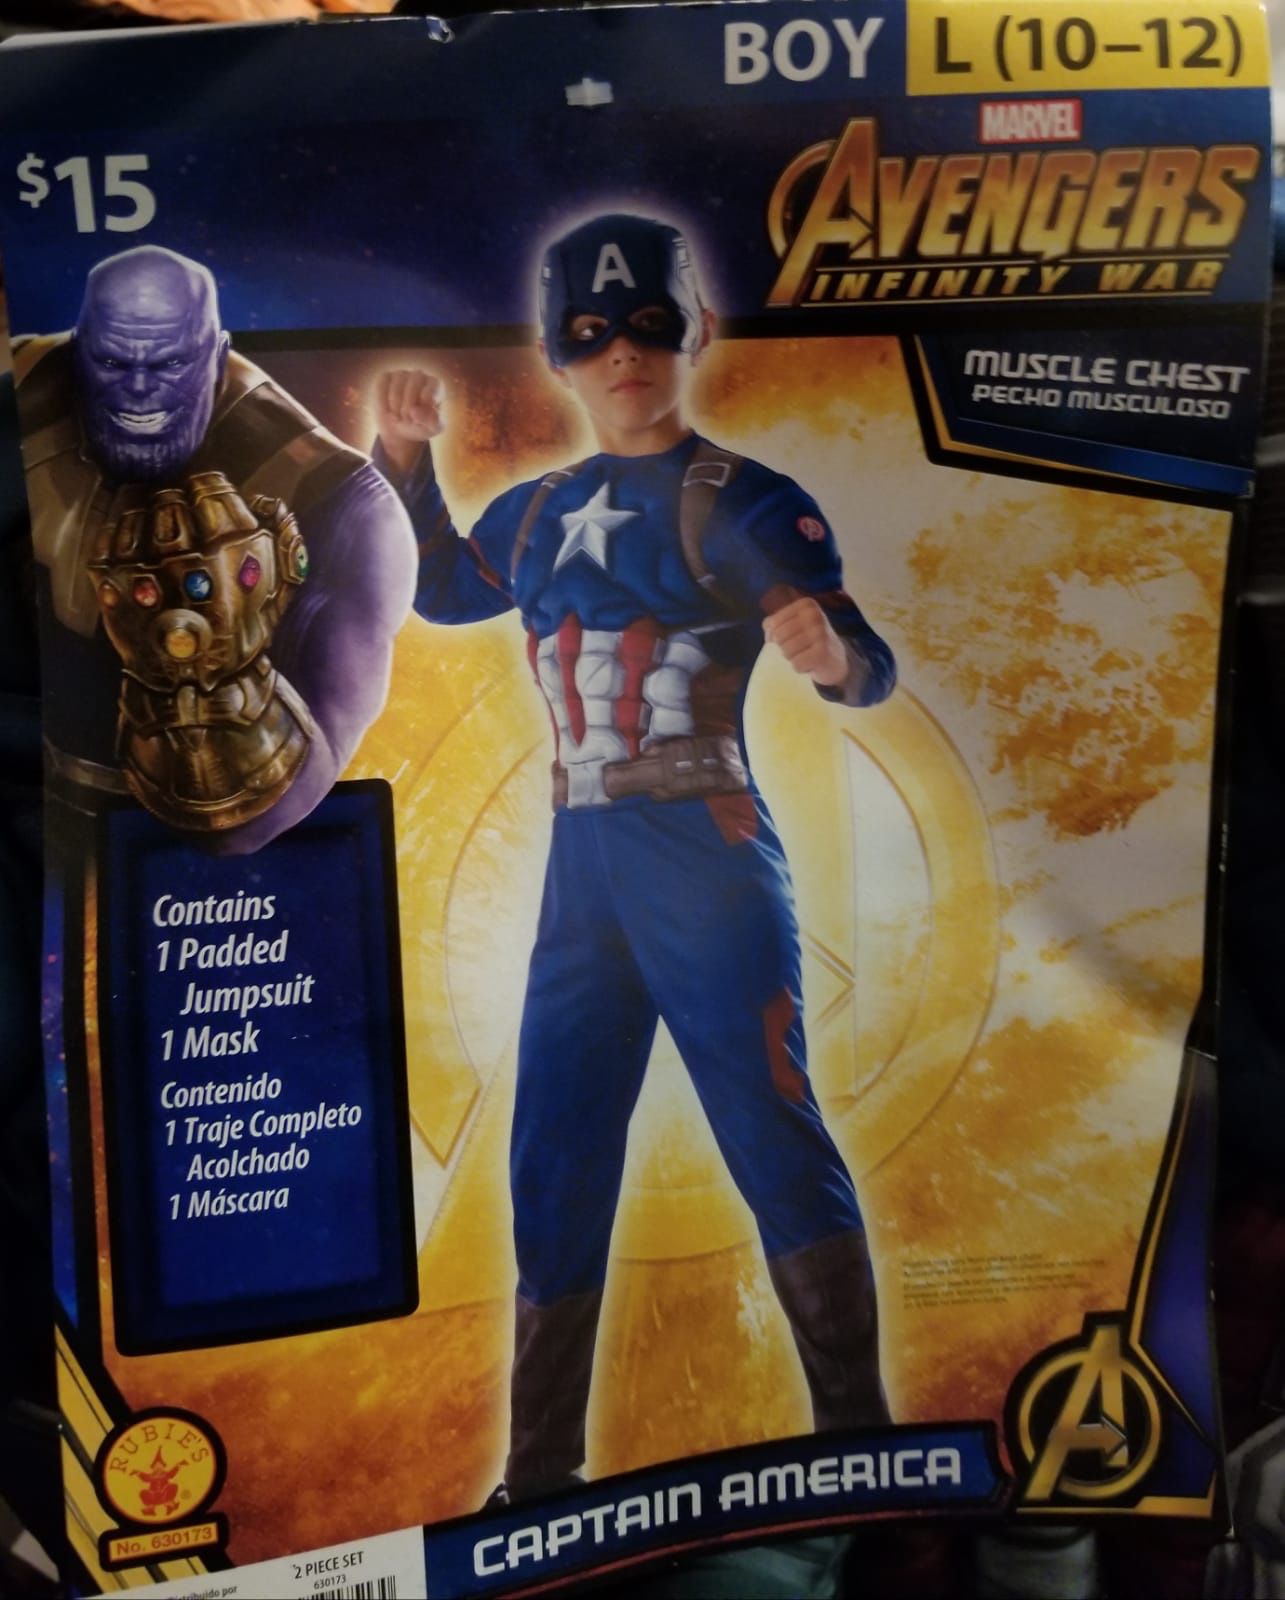 Captain America shield and costume